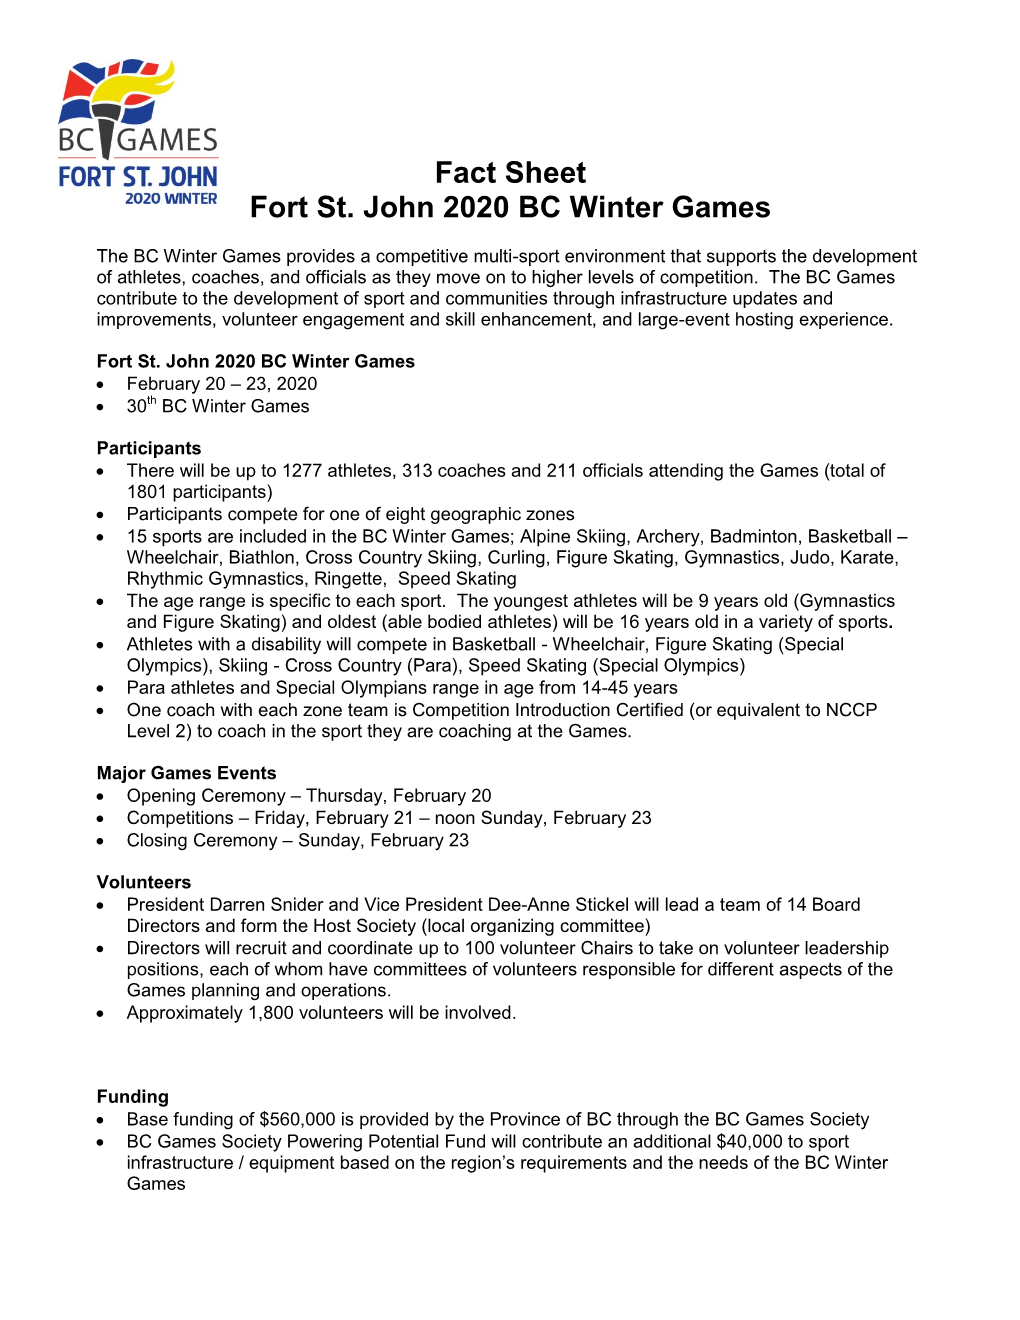 Fort St. John 2020 BC Winter Games Fact Sheet